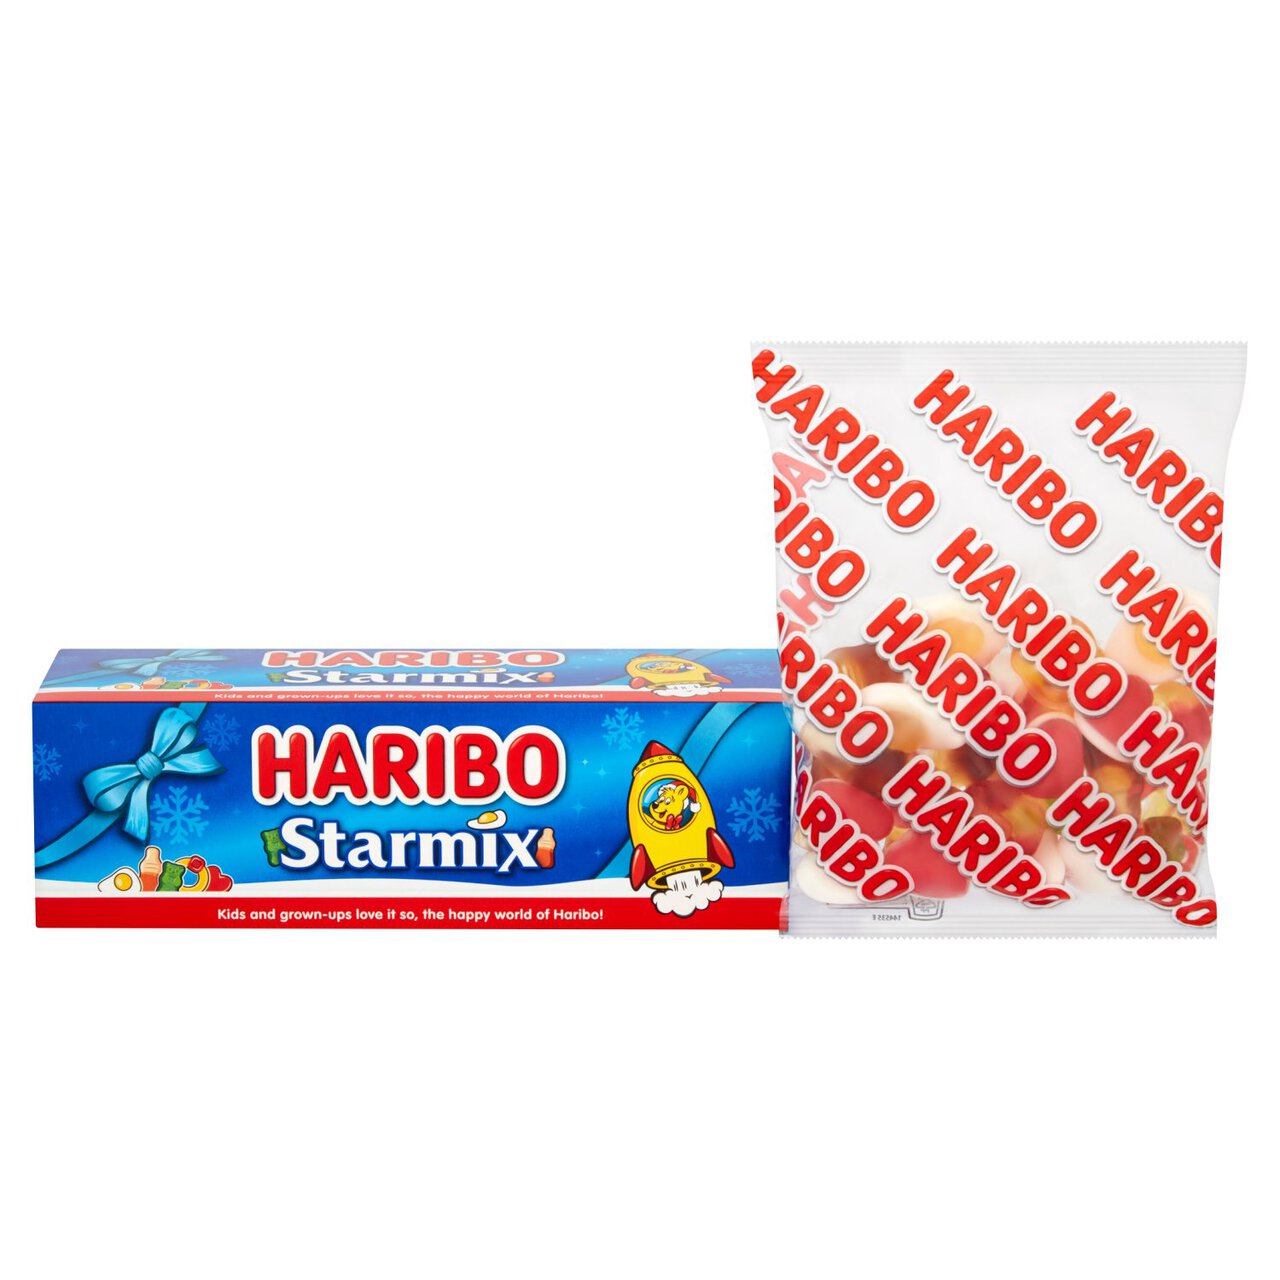 Haribo Starmix Christmas Stocking Filler Sweets Tube 120g